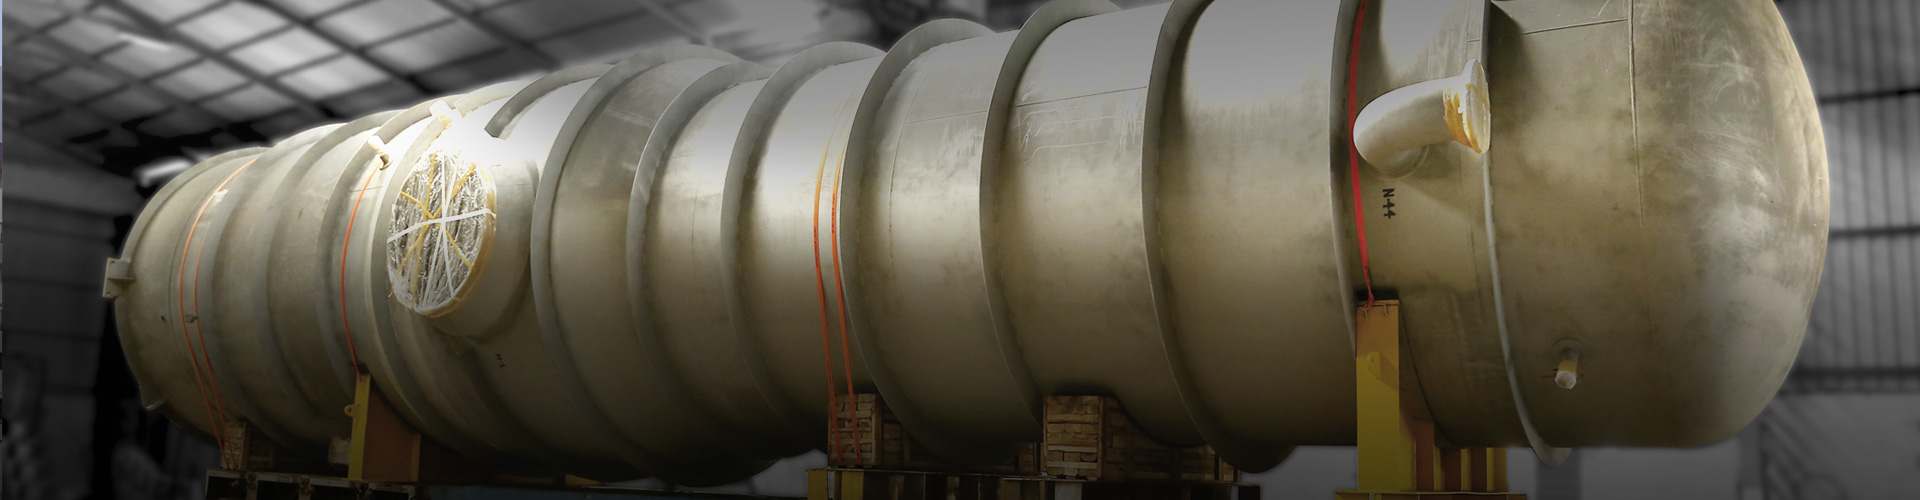 National Board of Boilers Certified Pressure Vessels Exporter